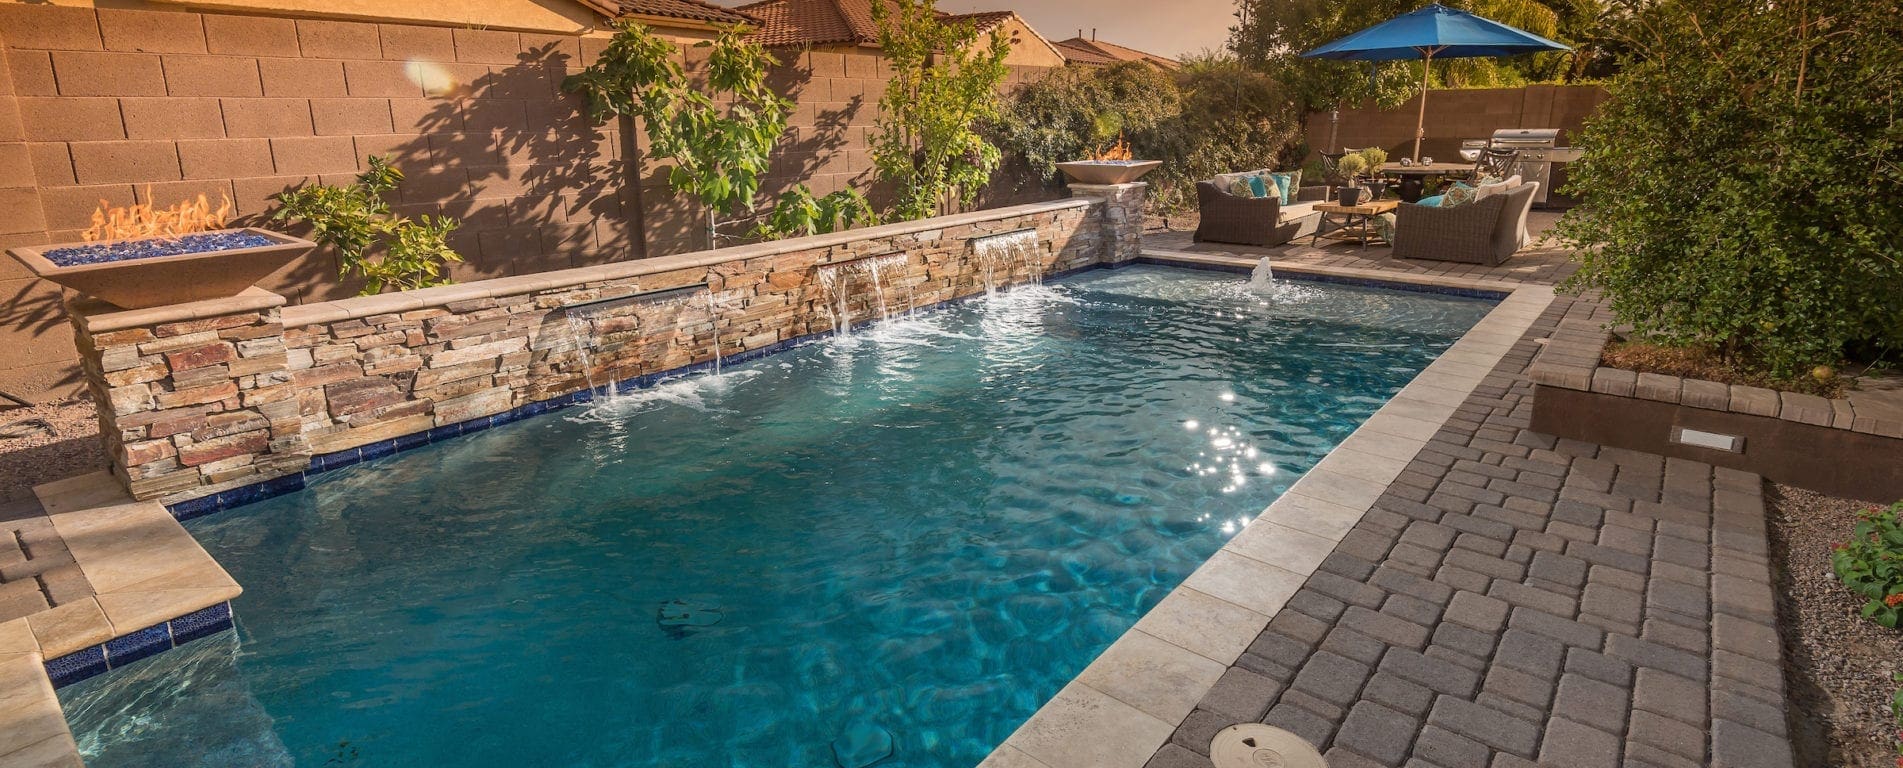 Arizona Swimming Pool Builder, Arizona Pool Landscaping Ideas